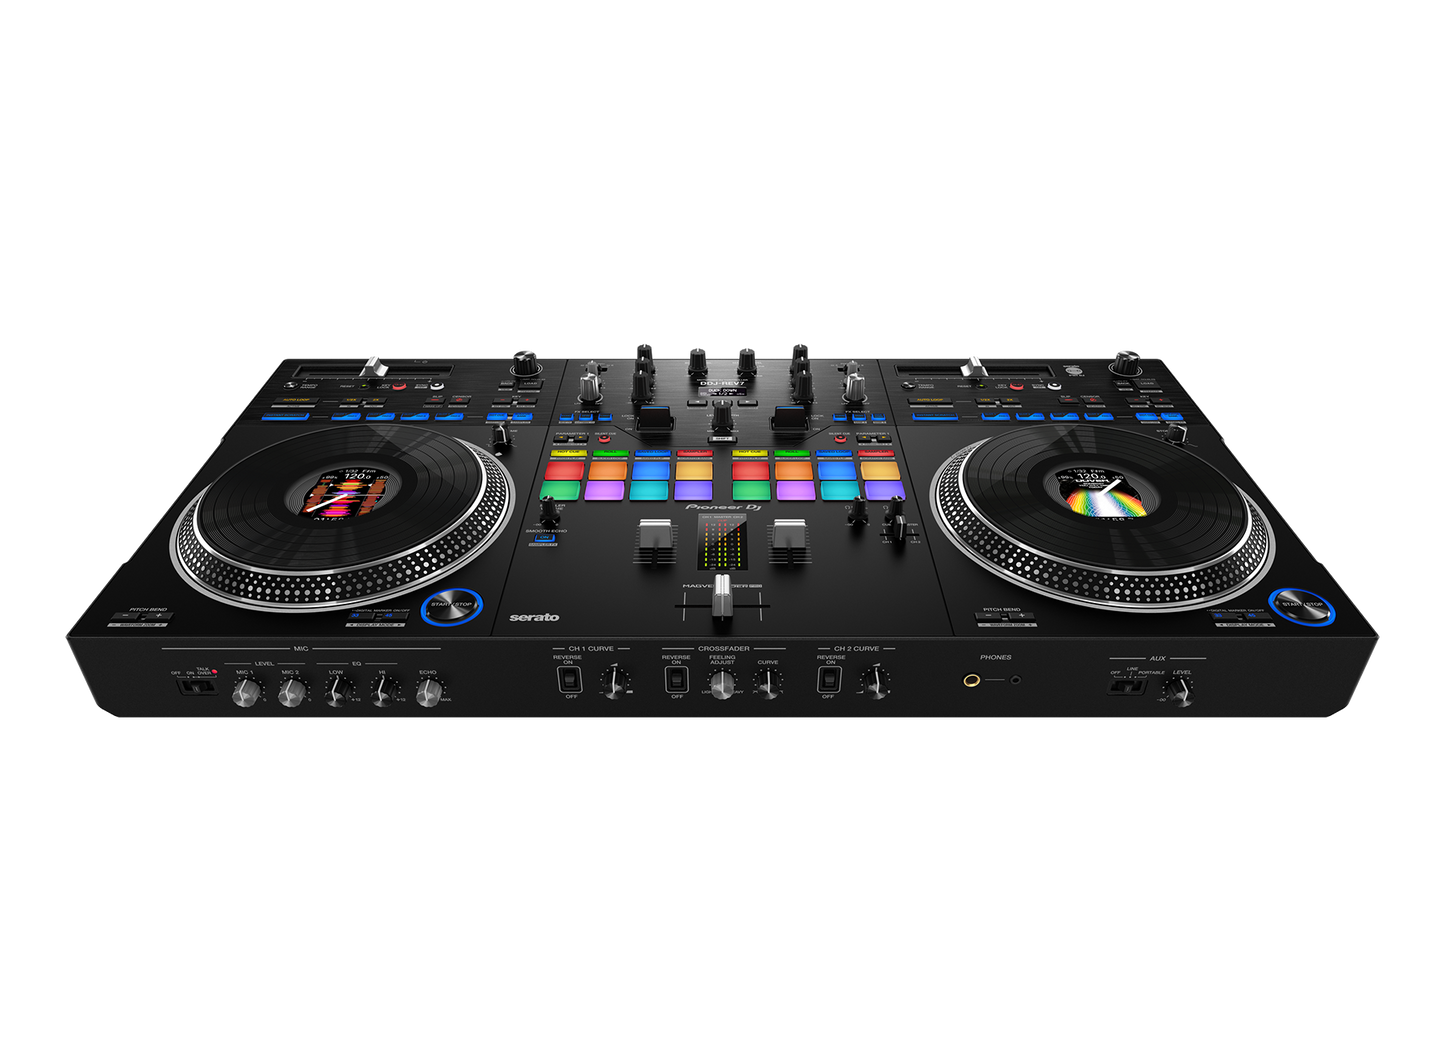 Pioneer DDJ-REV7 (Hong Kong licensed) DJ controller for Serato DJ Pro